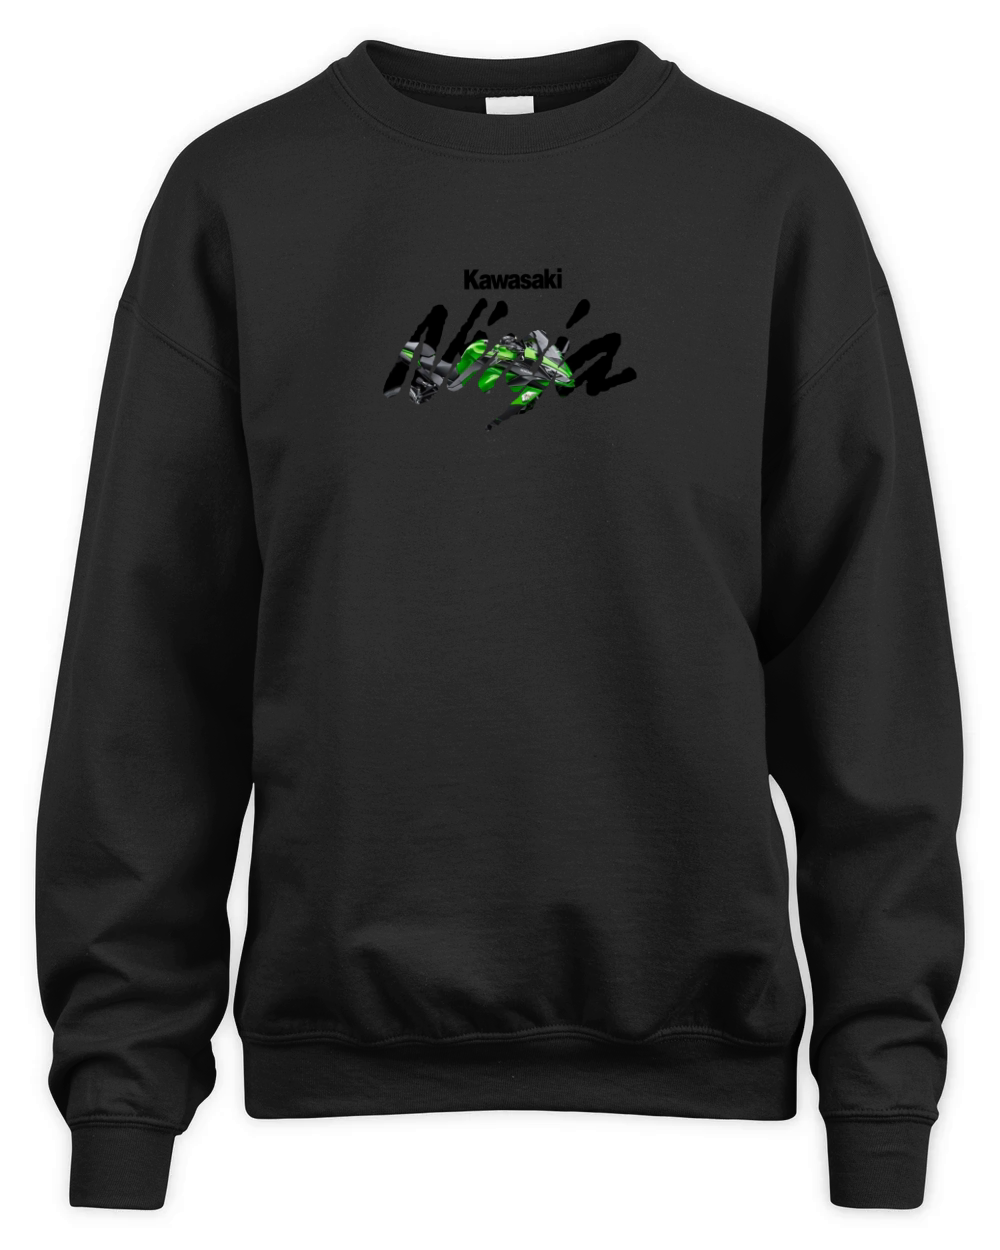 Kawasaki ninja Unisex Premium Crewneck Sweatshirt - Designed by Tshirt  factory